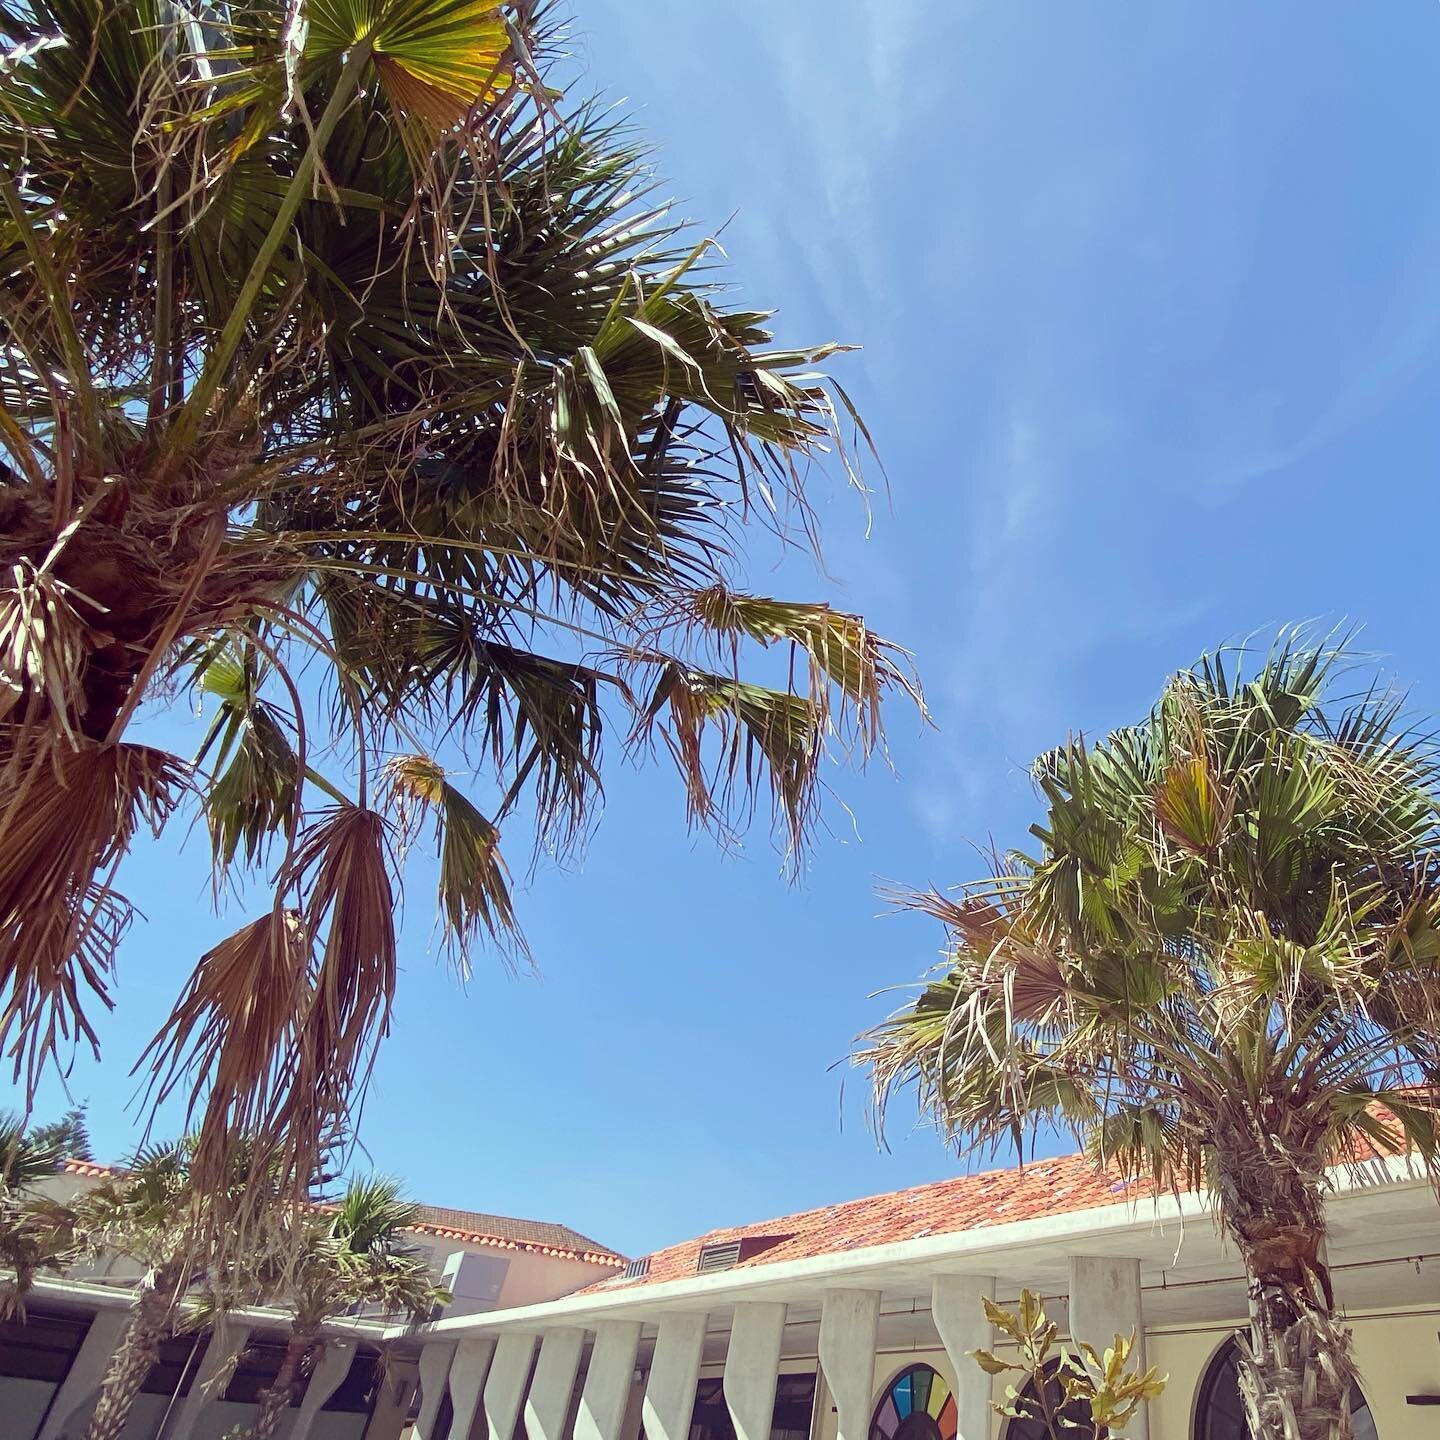 Postcards from the pavilion #angles #architecture #australia #blue #bondi #bondipavilion #palmtrees #sky #sydney